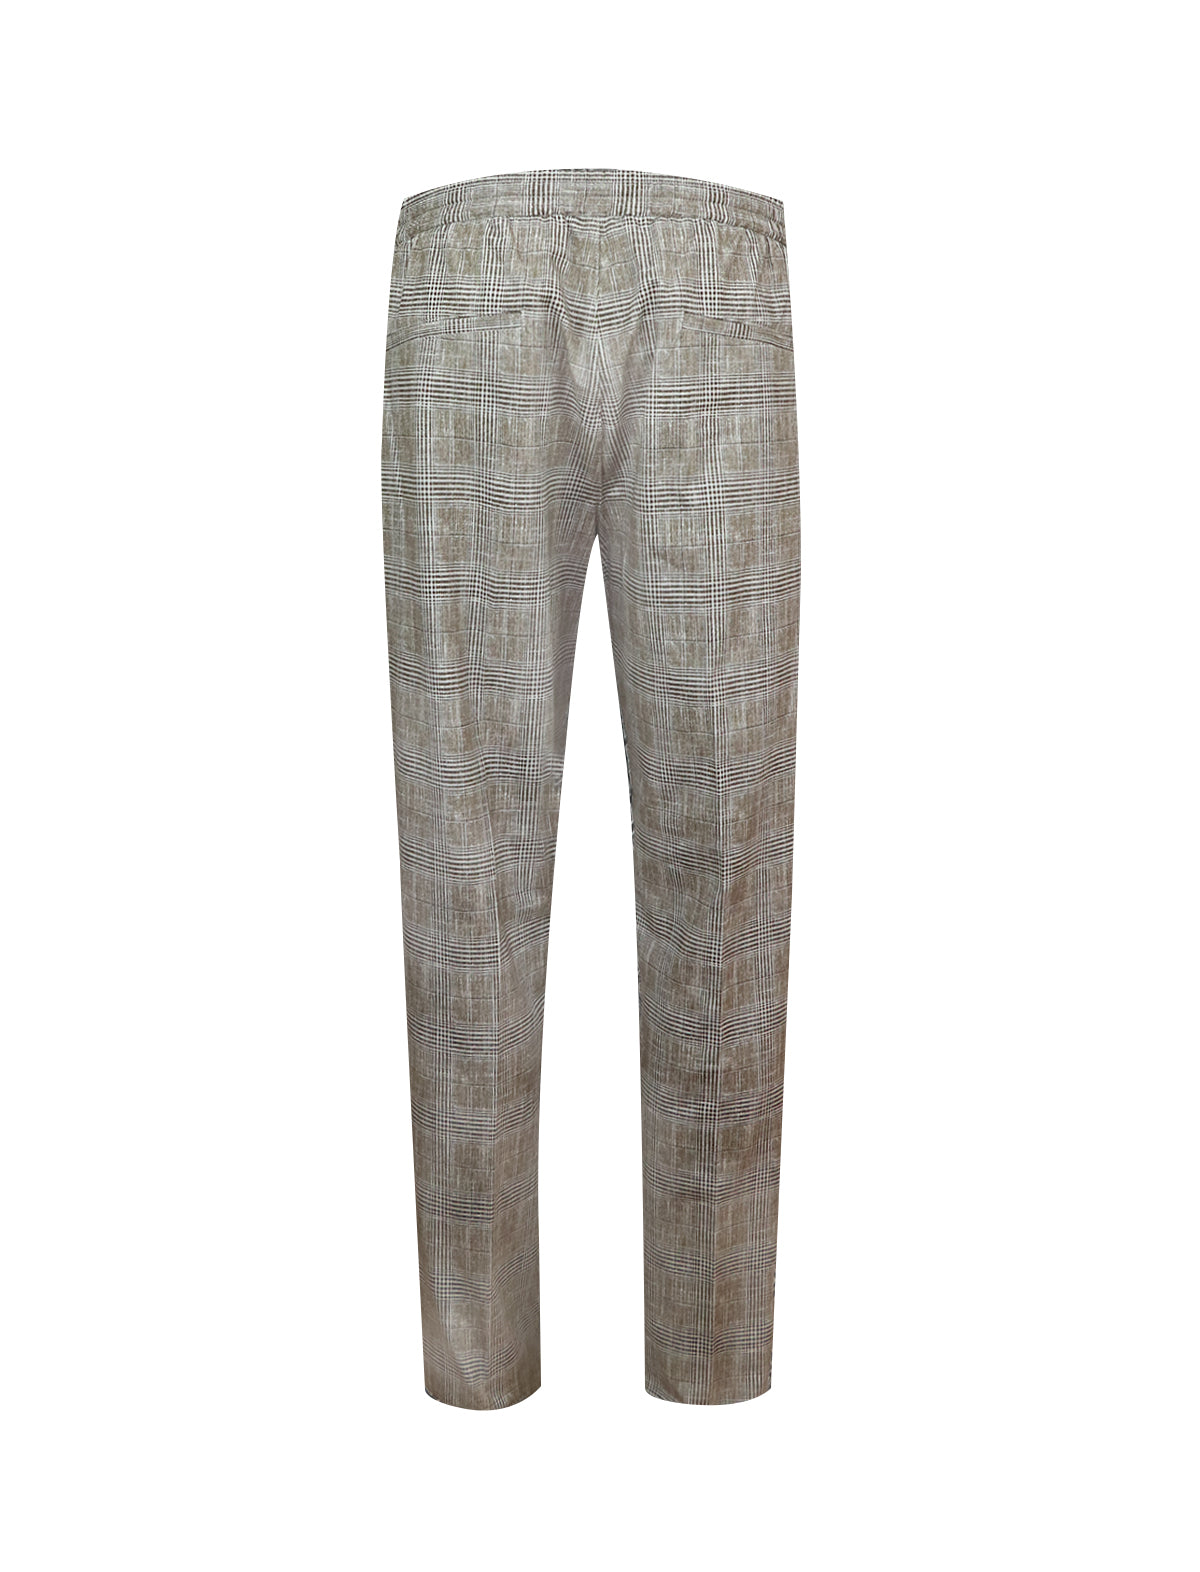 CIRCOLO 1901 Glen-Check Pants in Light Brown